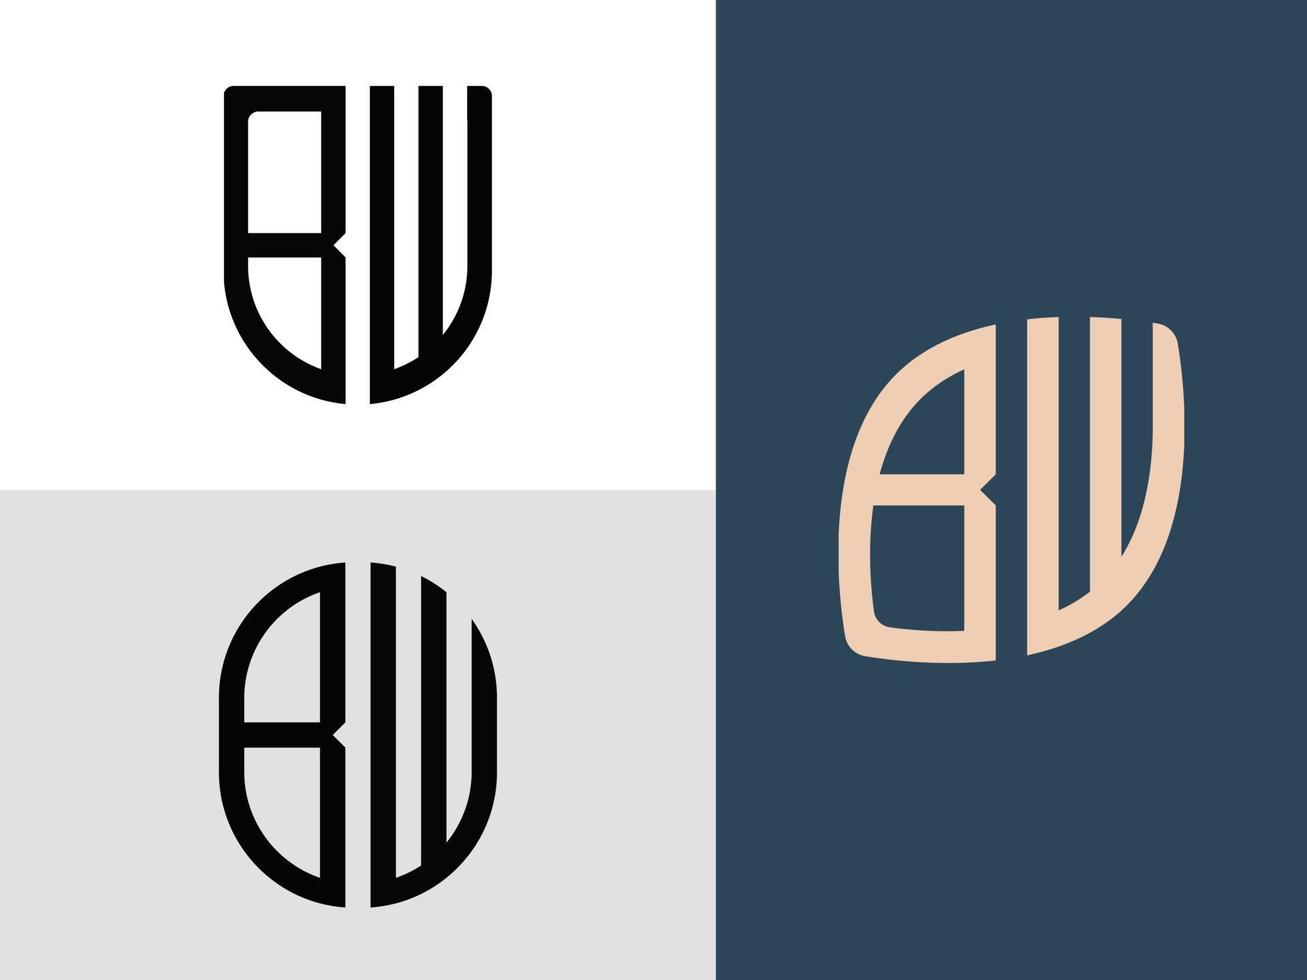 kreative anfangsbuchstaben bw logo designs paket. vektor